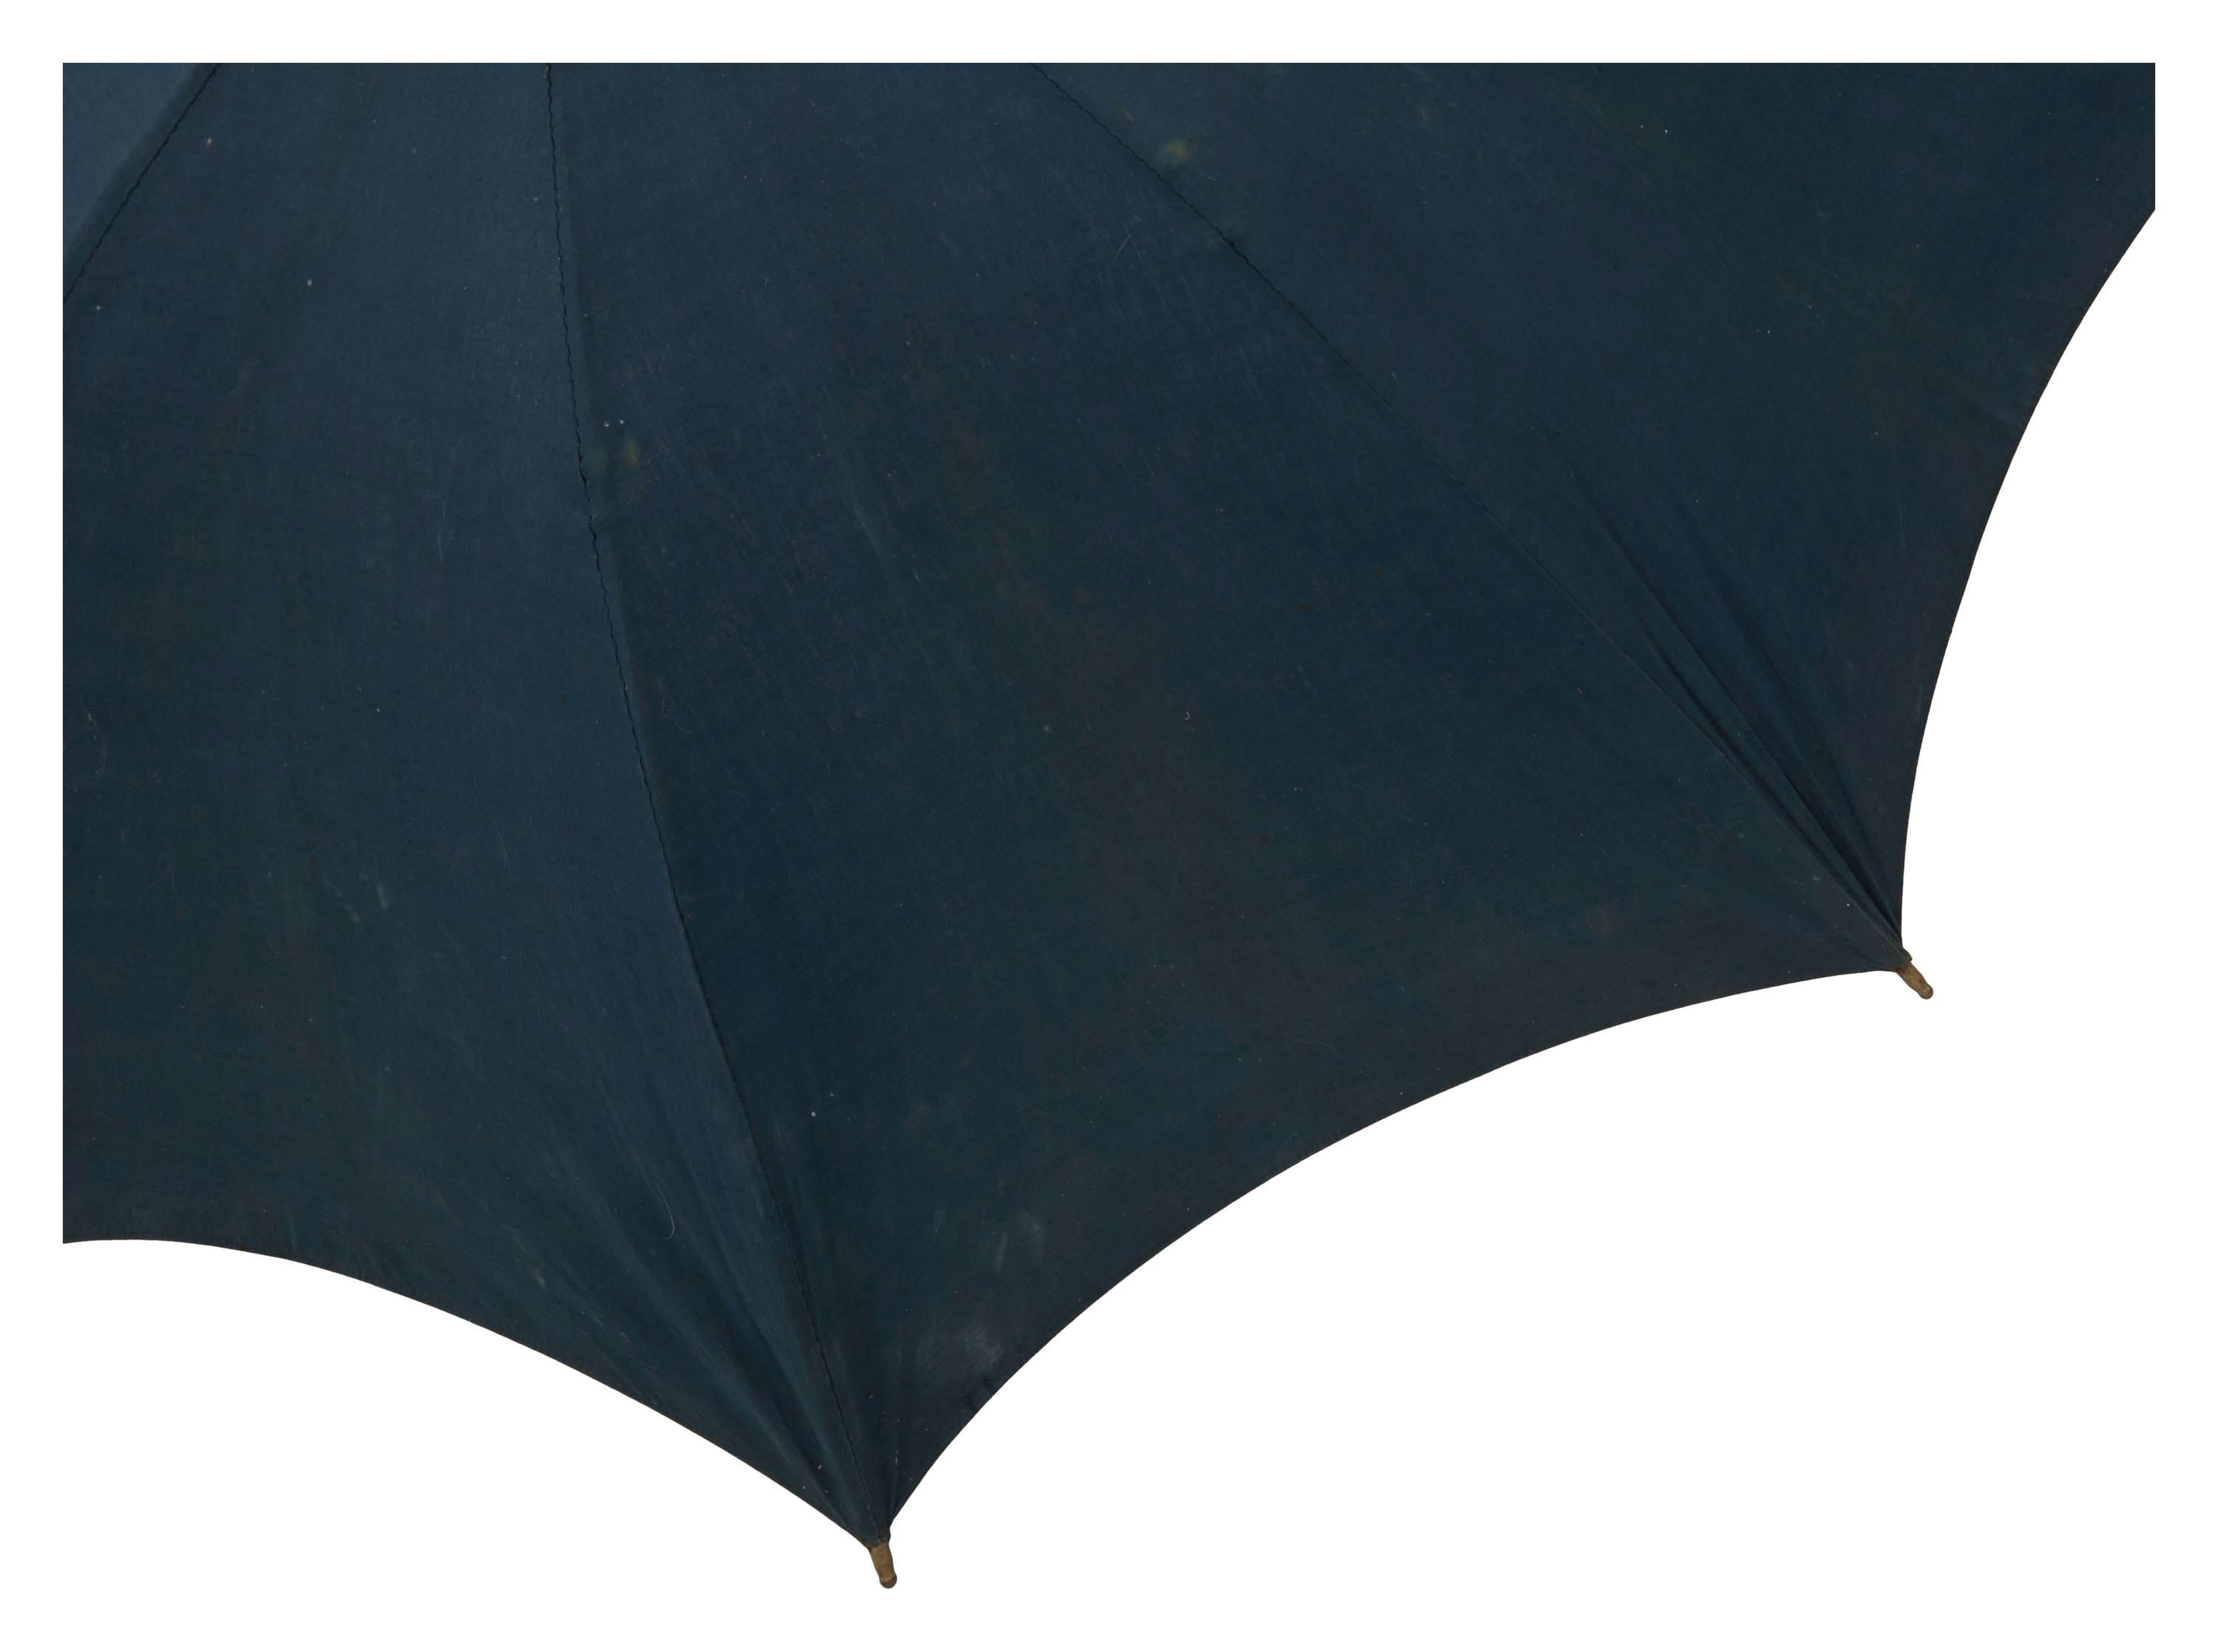 Dyed Early 20th Century Indigo Canvas Umbrella For Sale